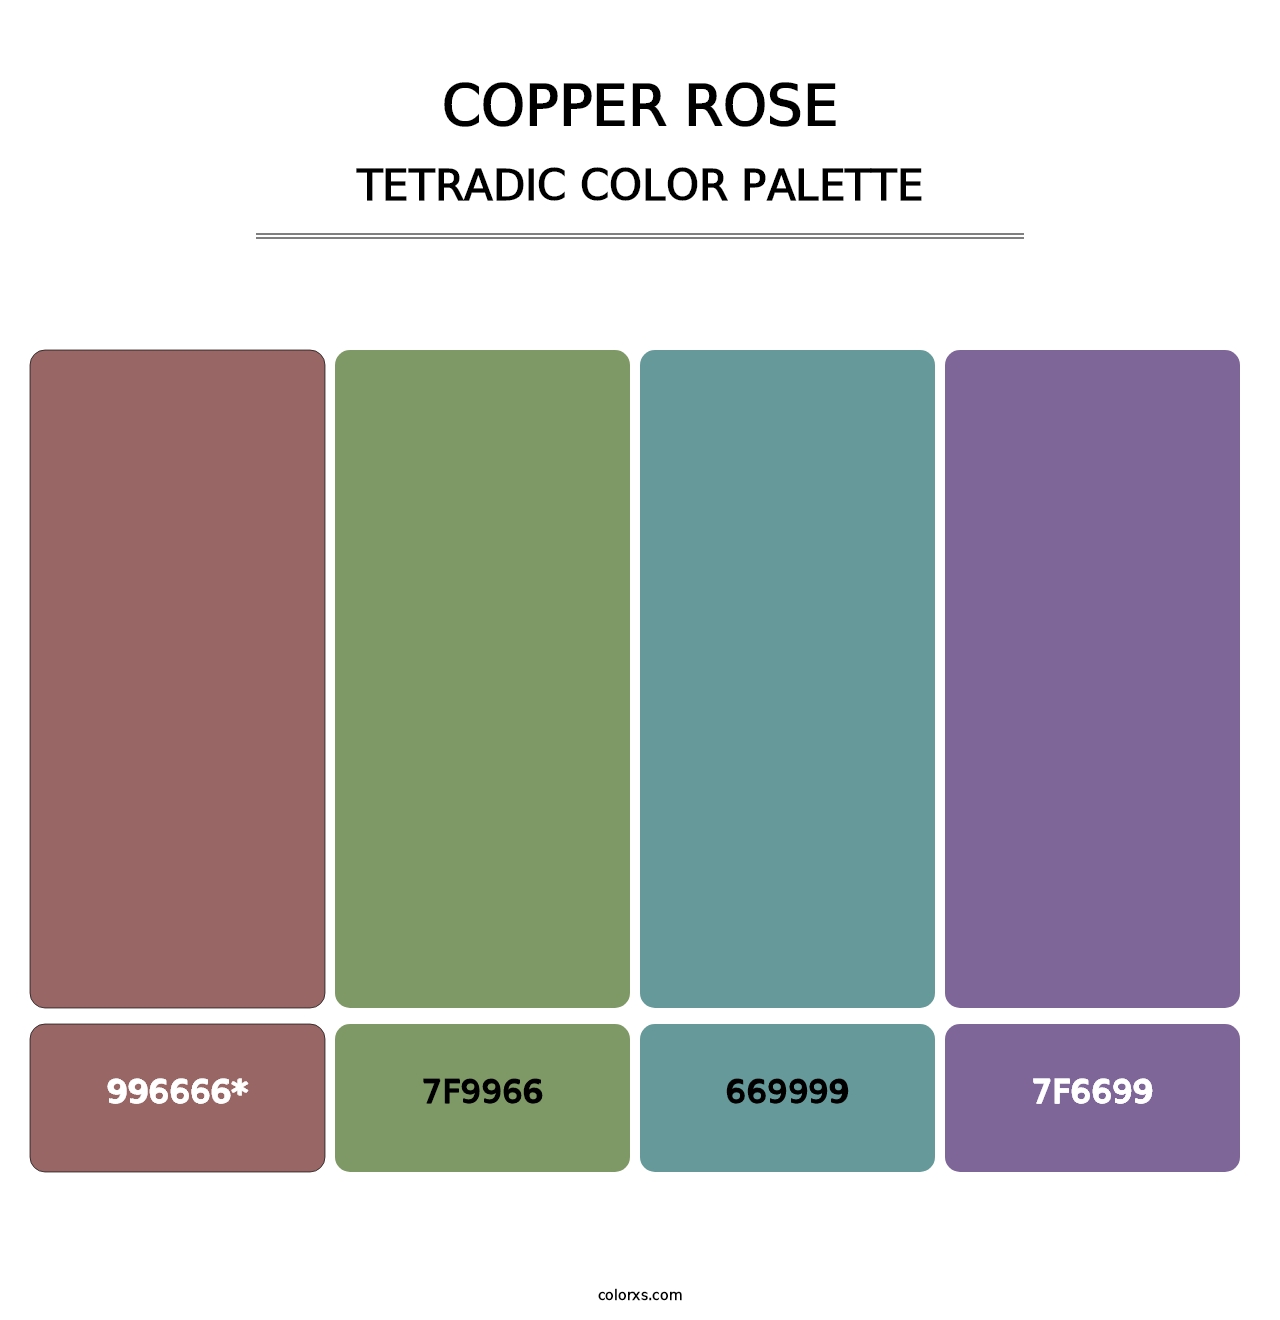 Copper rose - Tetradic Color Palette